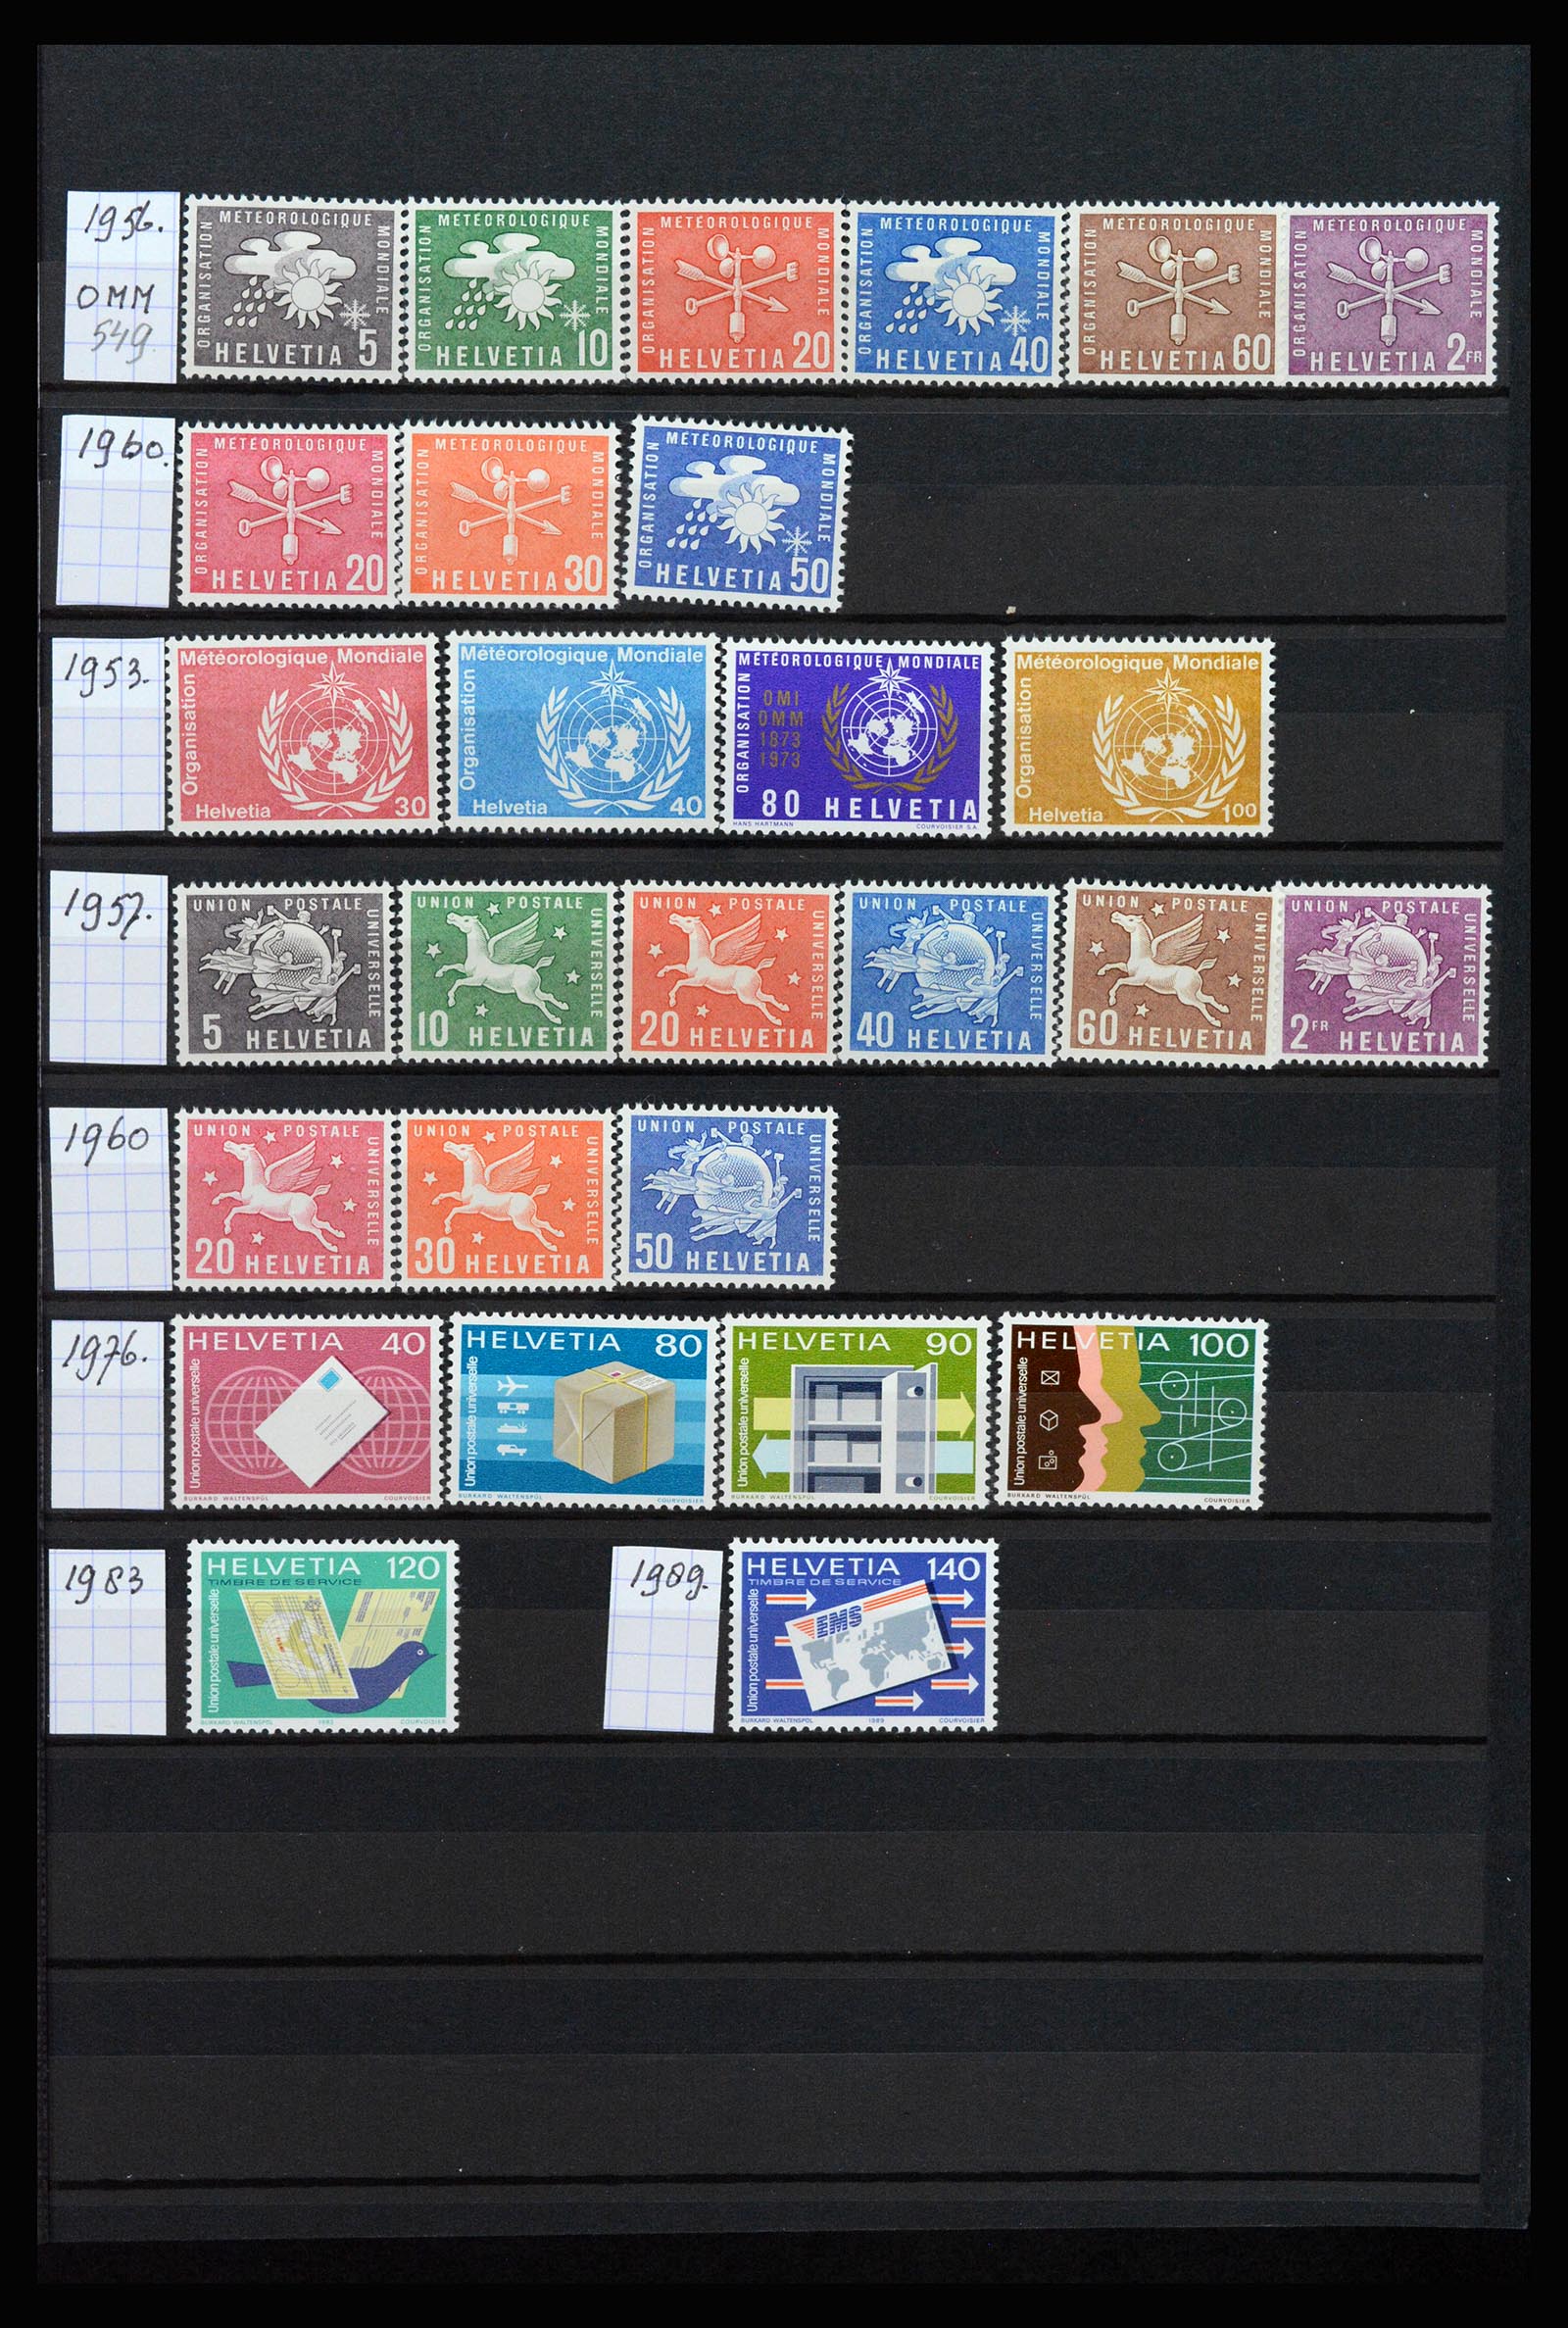 37225 165 - Stamp collection 37225 Switzerland 1854-2020.